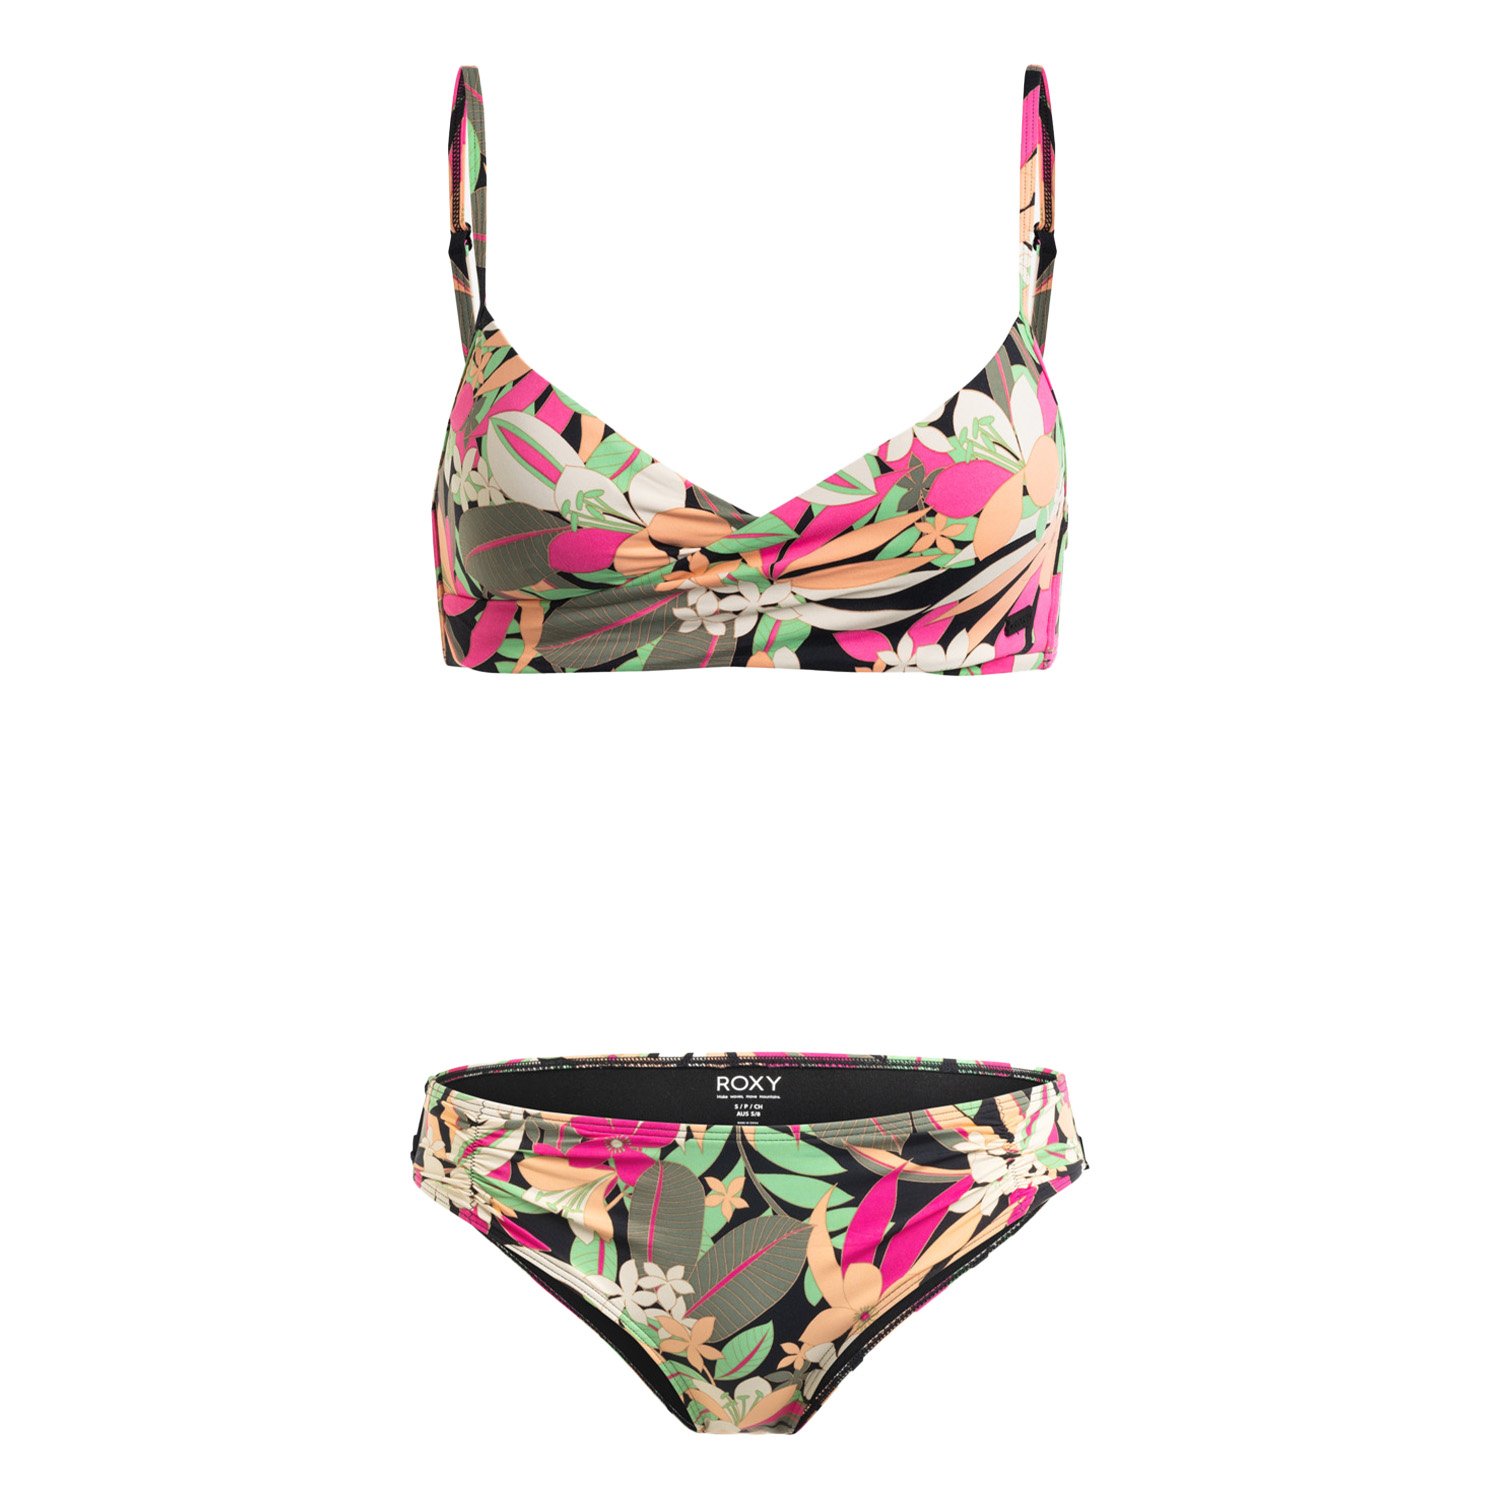 Roxy Printed Beach Classics Wrap Kadın Bikini - Renkli - 1